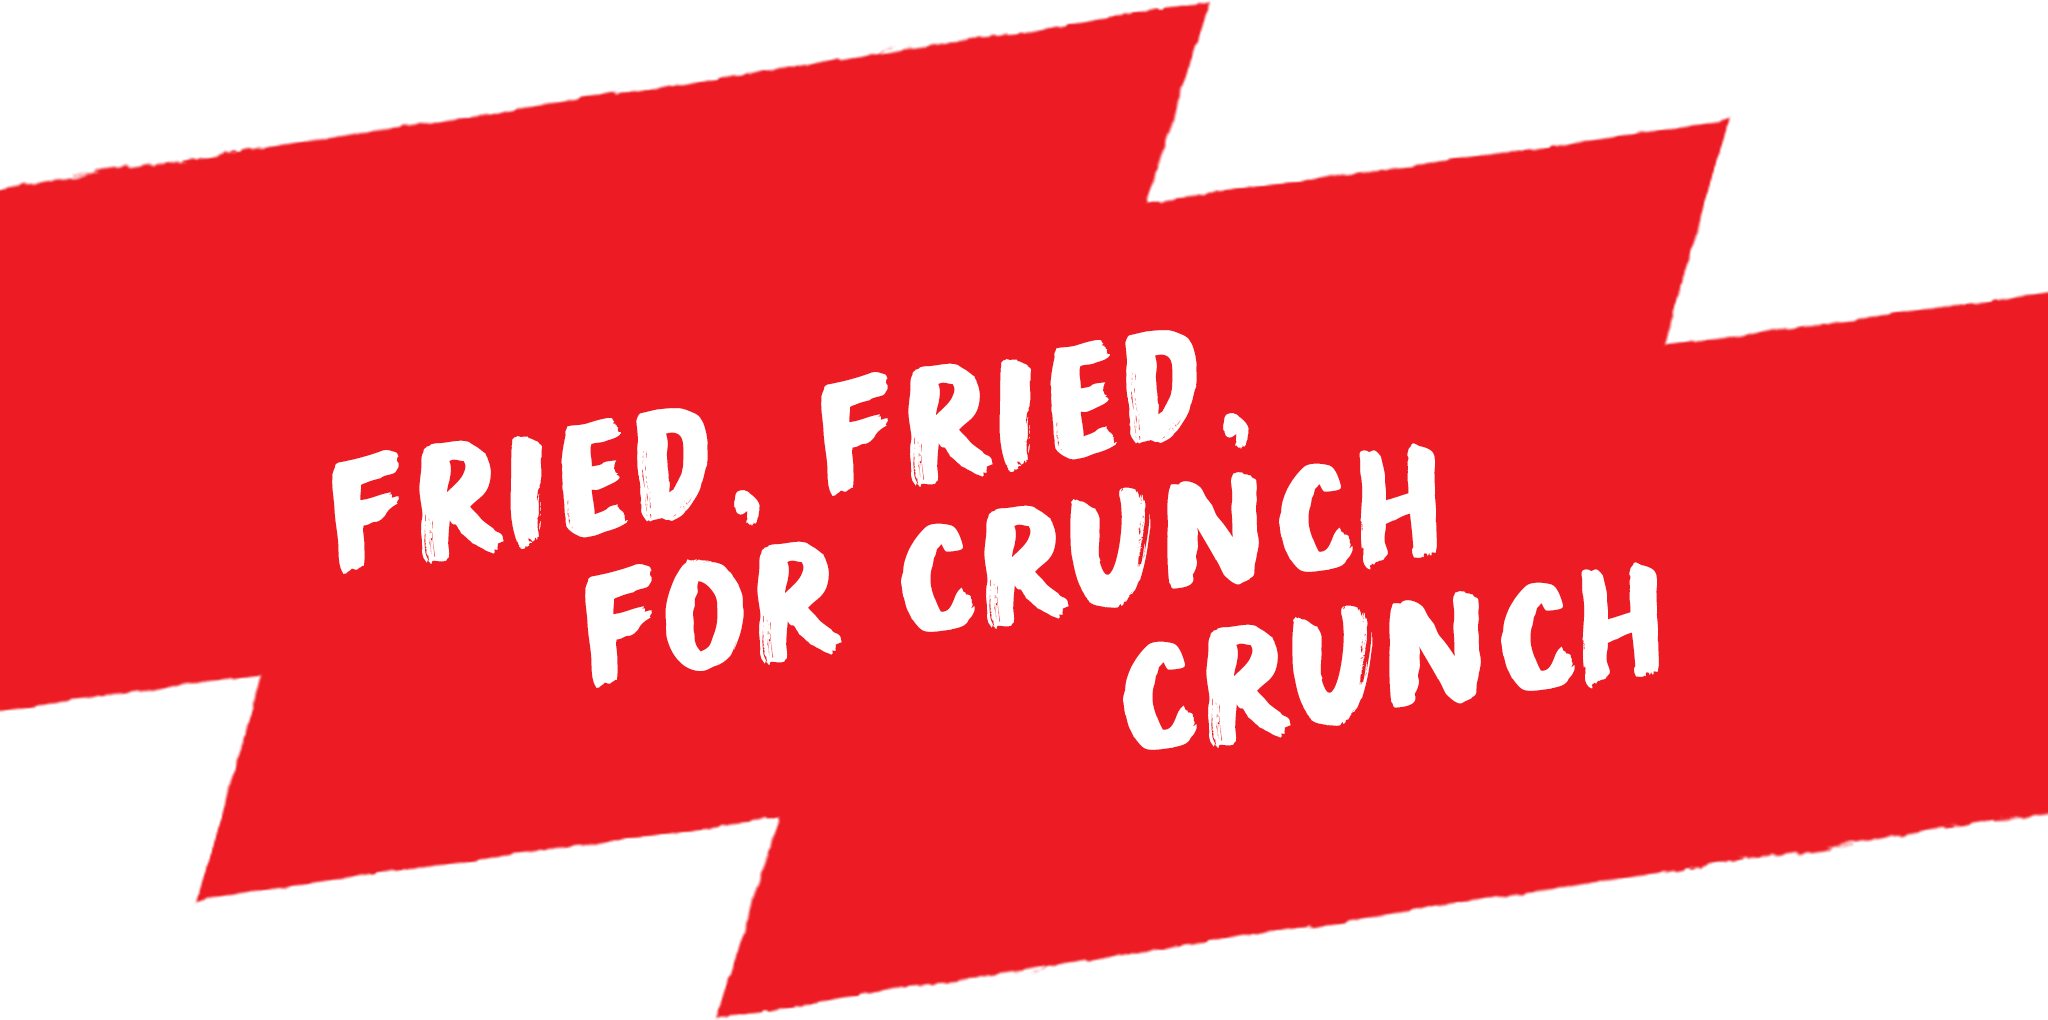 Fried, fried, for crunch crunch